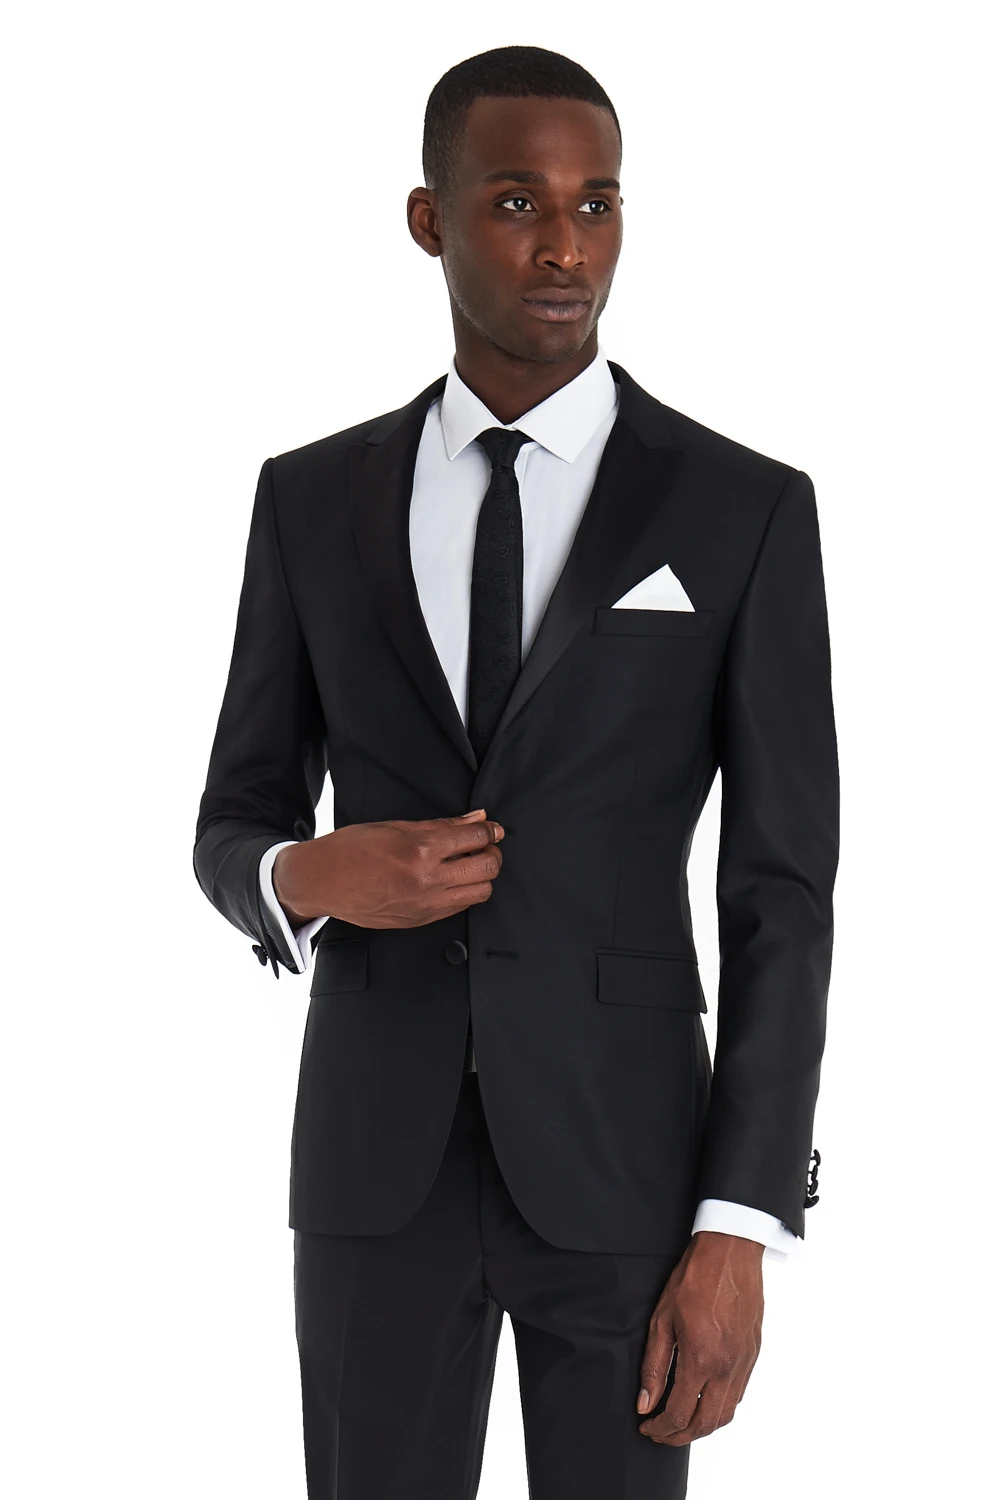 product name: man"s suit,business suits,formal suit,wedding